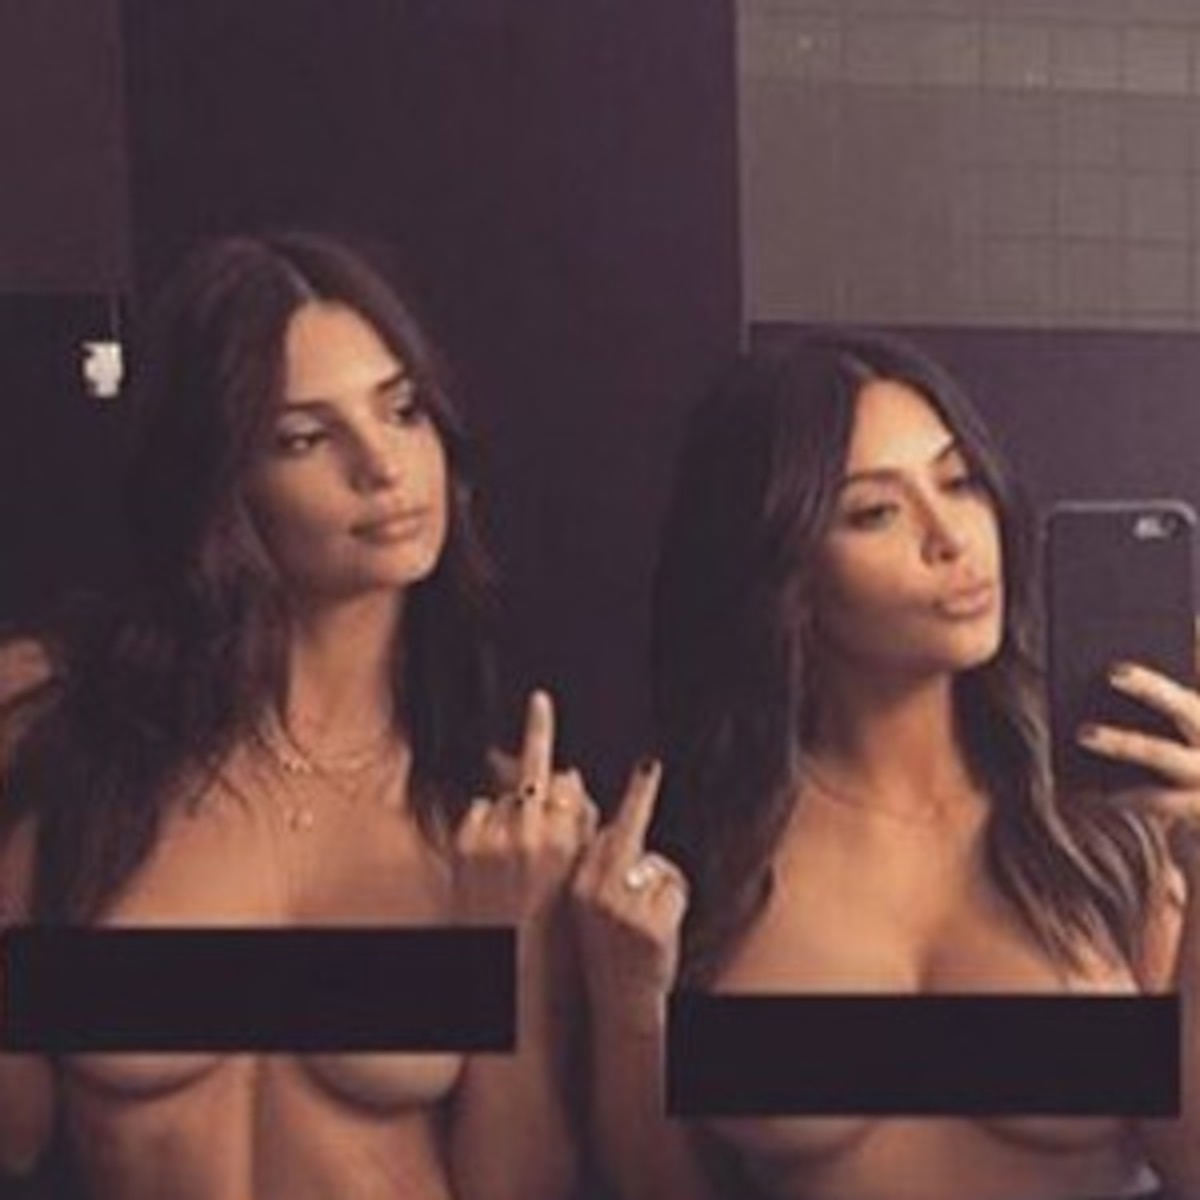 david truelove add uncensored kim kardashian nude selfie photo